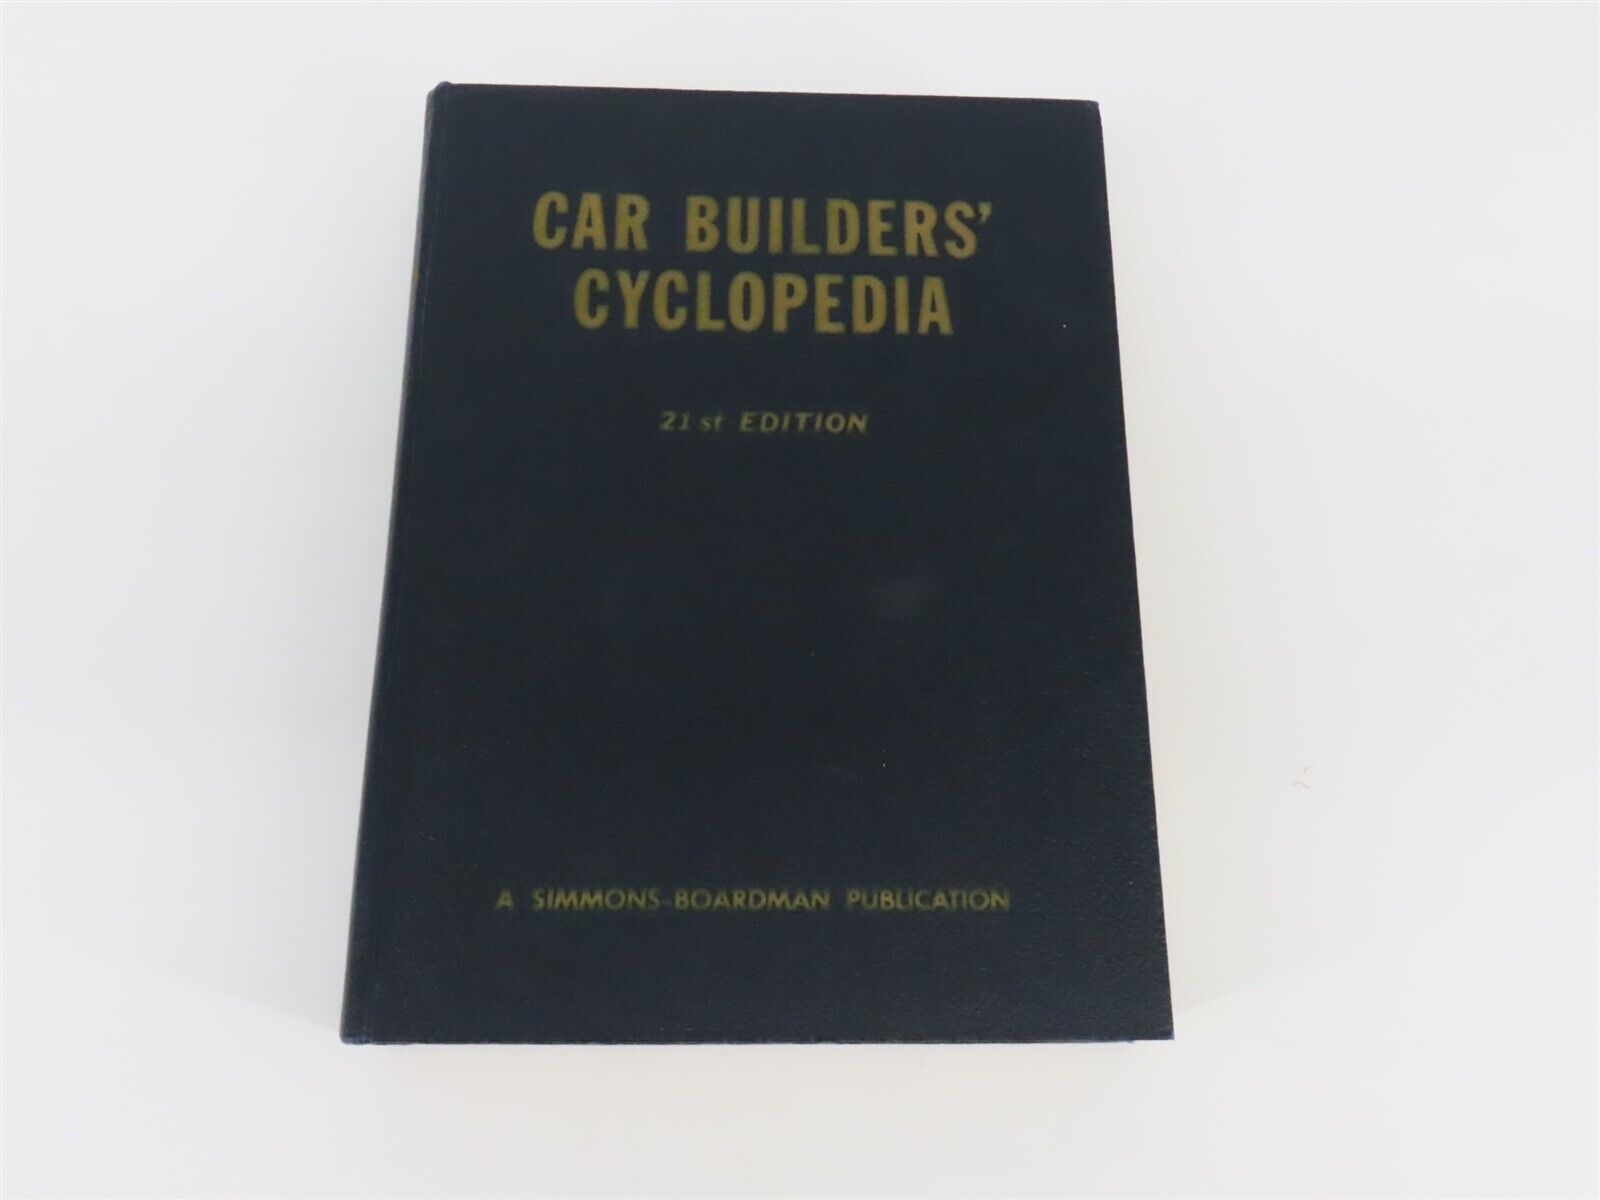 Car Builders\' Cyclopedia 21st Edition - A Simmons-Boardman Publication ©1961 HC 